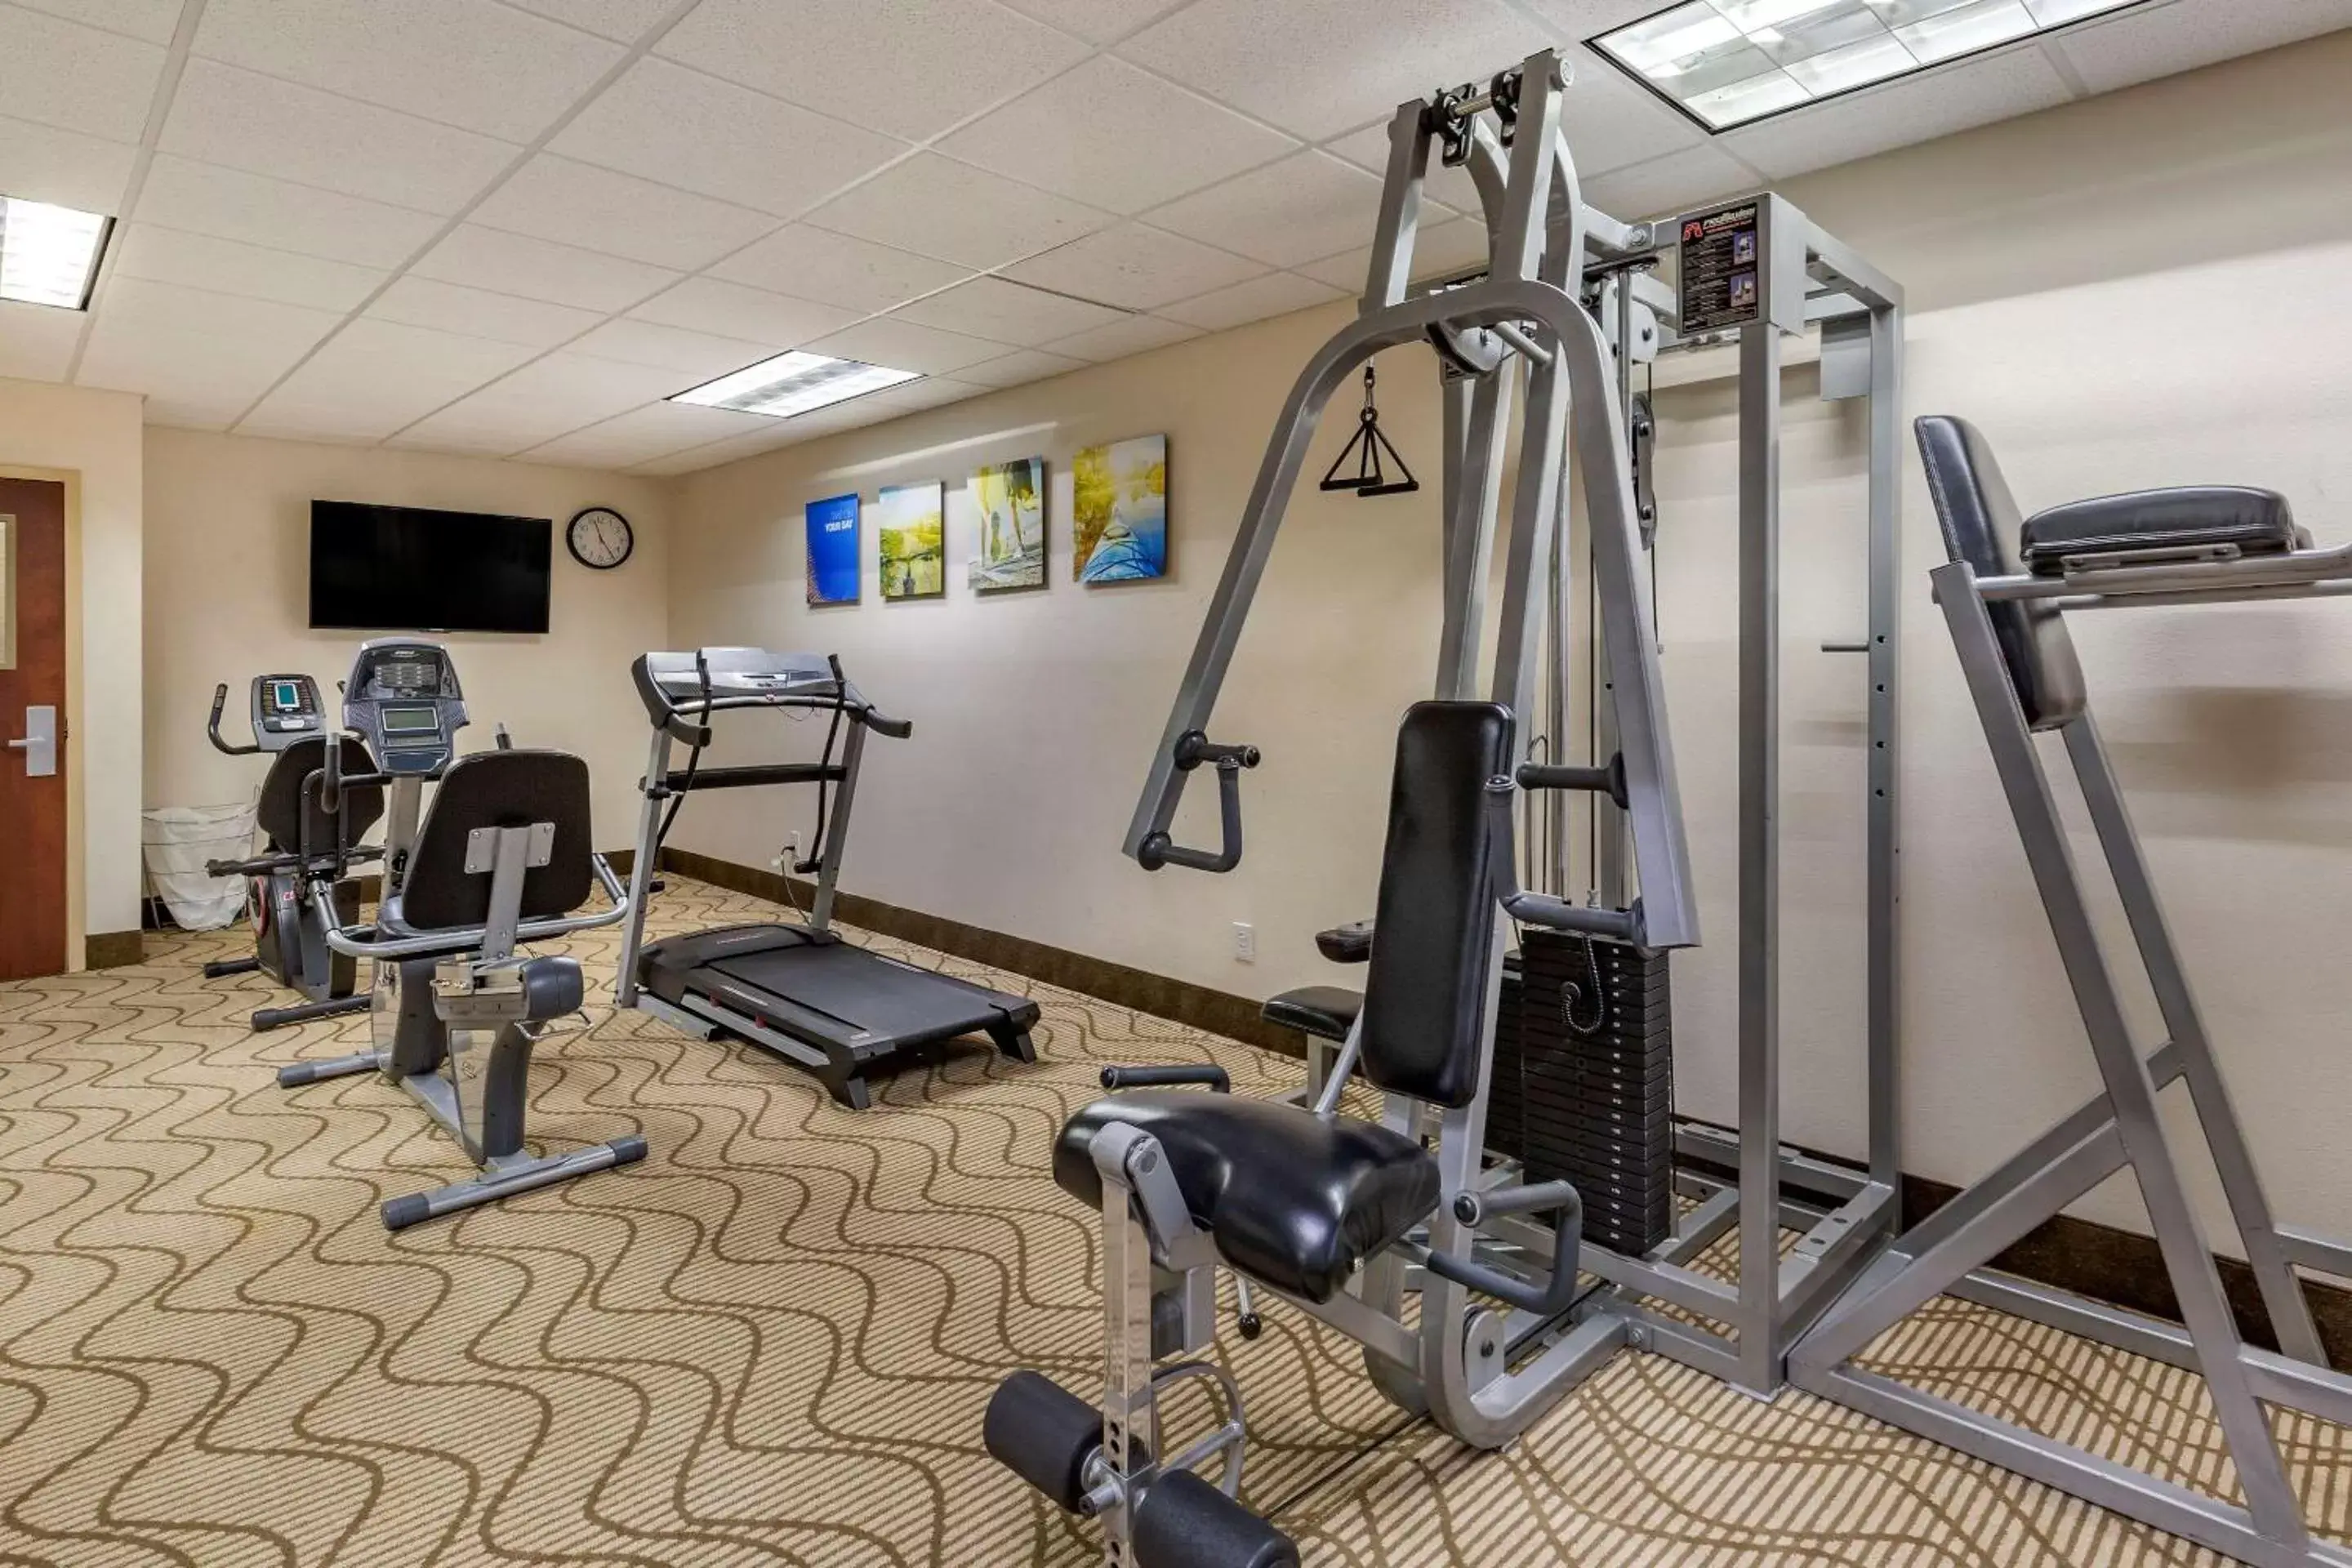 Fitness centre/facilities, Fitness Center/Facilities in Comfort Inn Smithfield near I-95